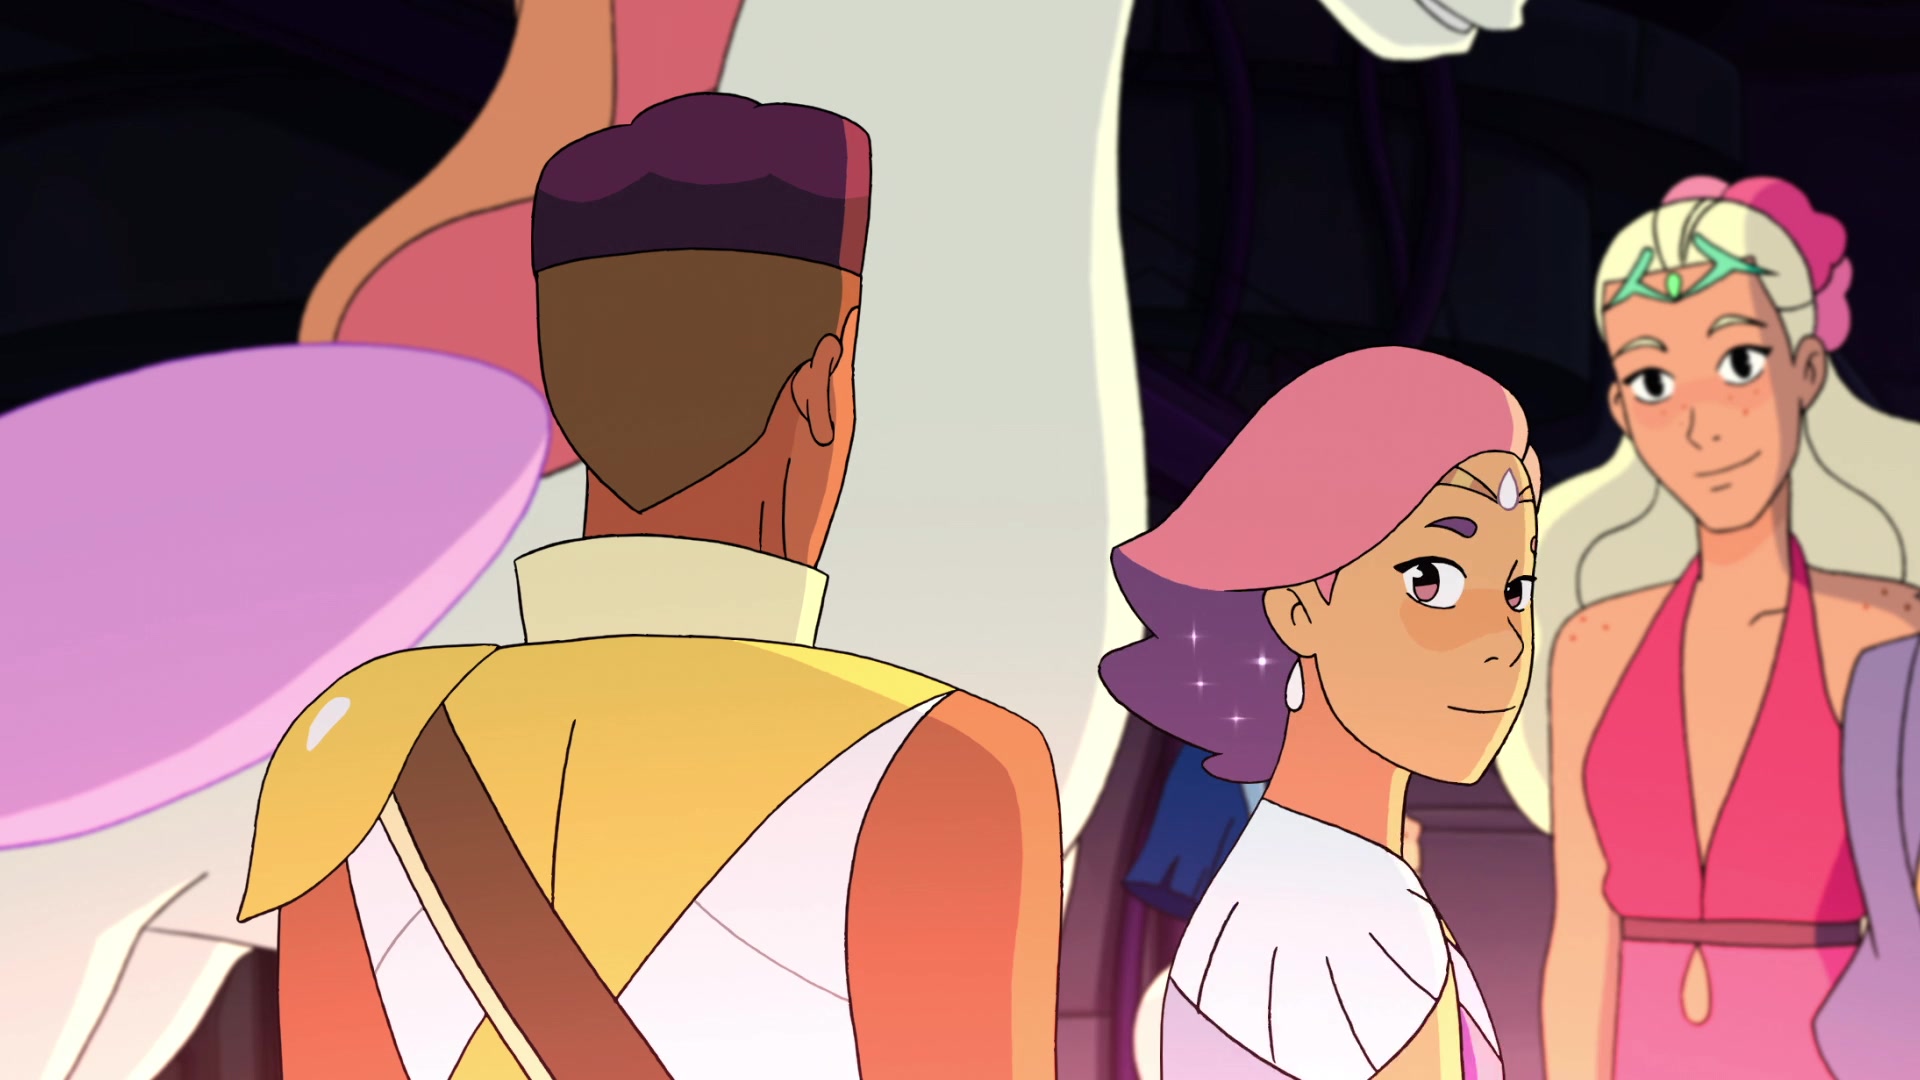 She-Ra and the Princesses of Power S05E12